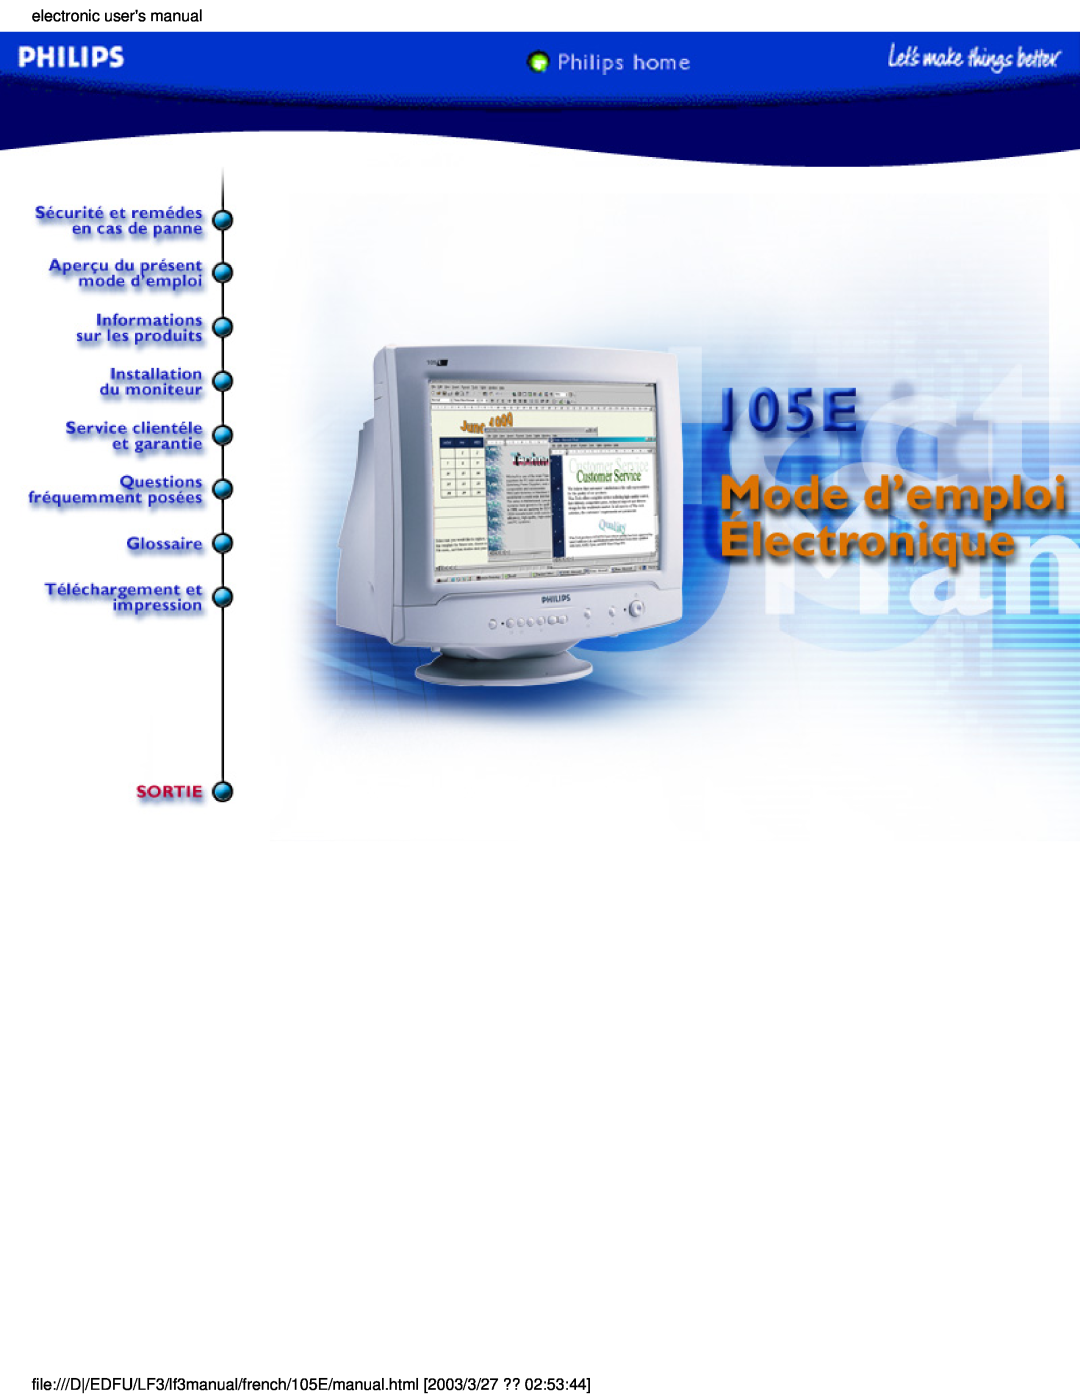 Philips user manual electronic users manual, file///D/EDFU/LF3/lf3manual/french/105E/manual.html 2003/3/27 ?? 